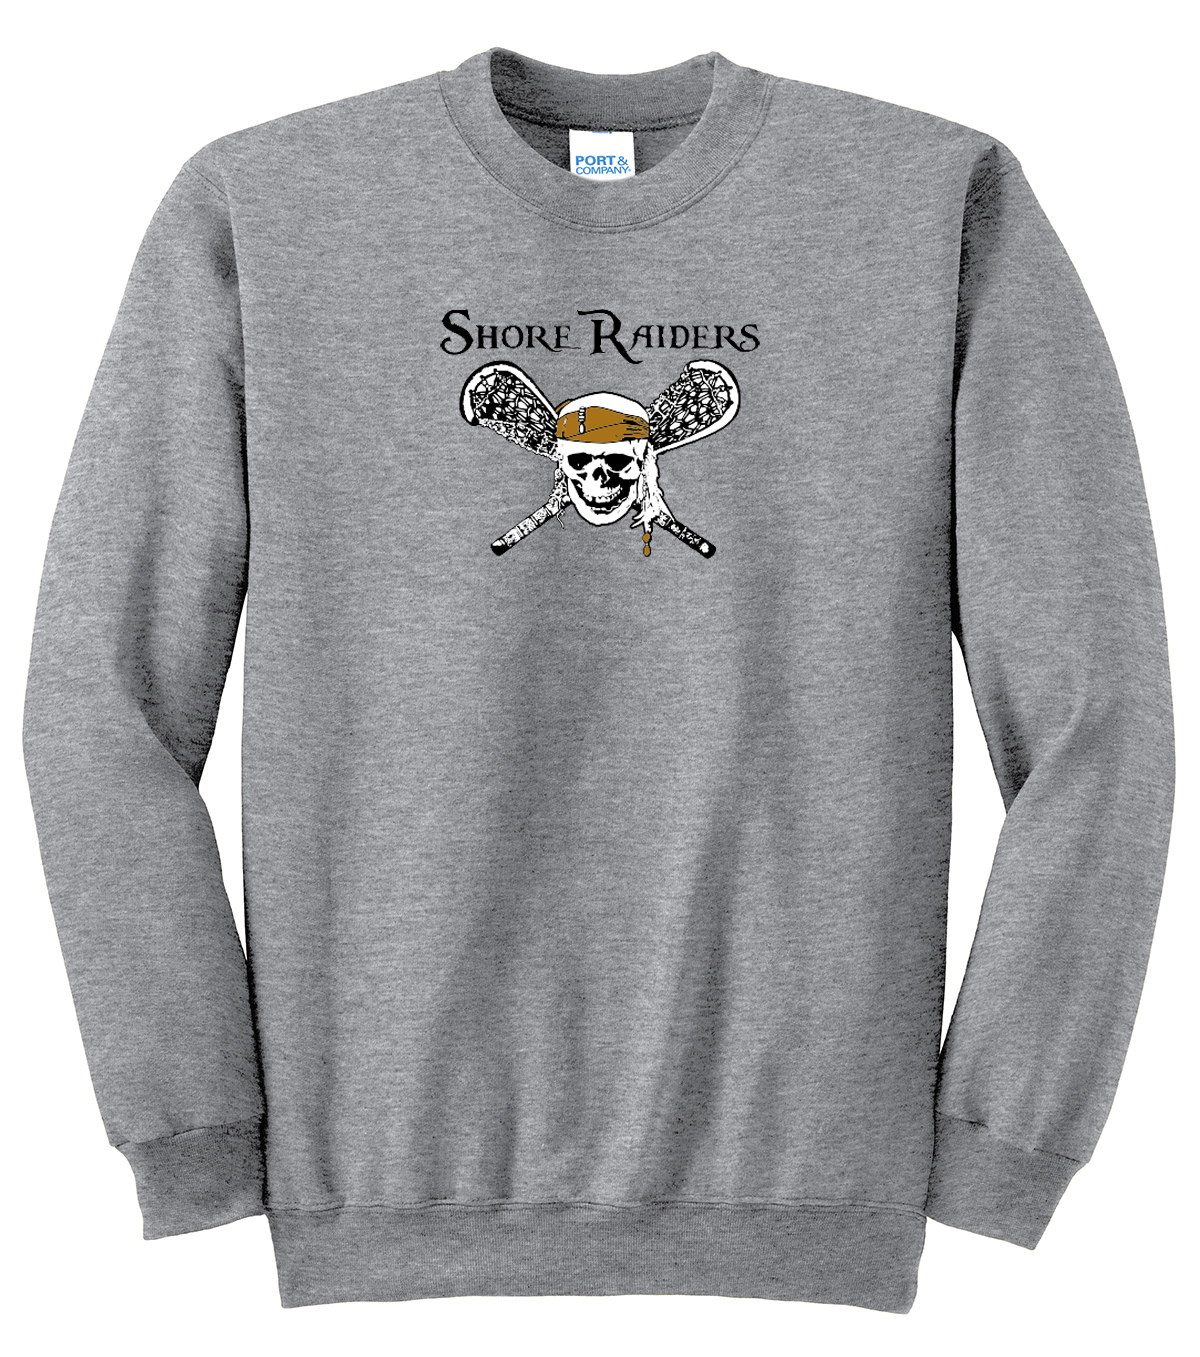 Shore Raiders Lacrosse Crew Neck Sweater